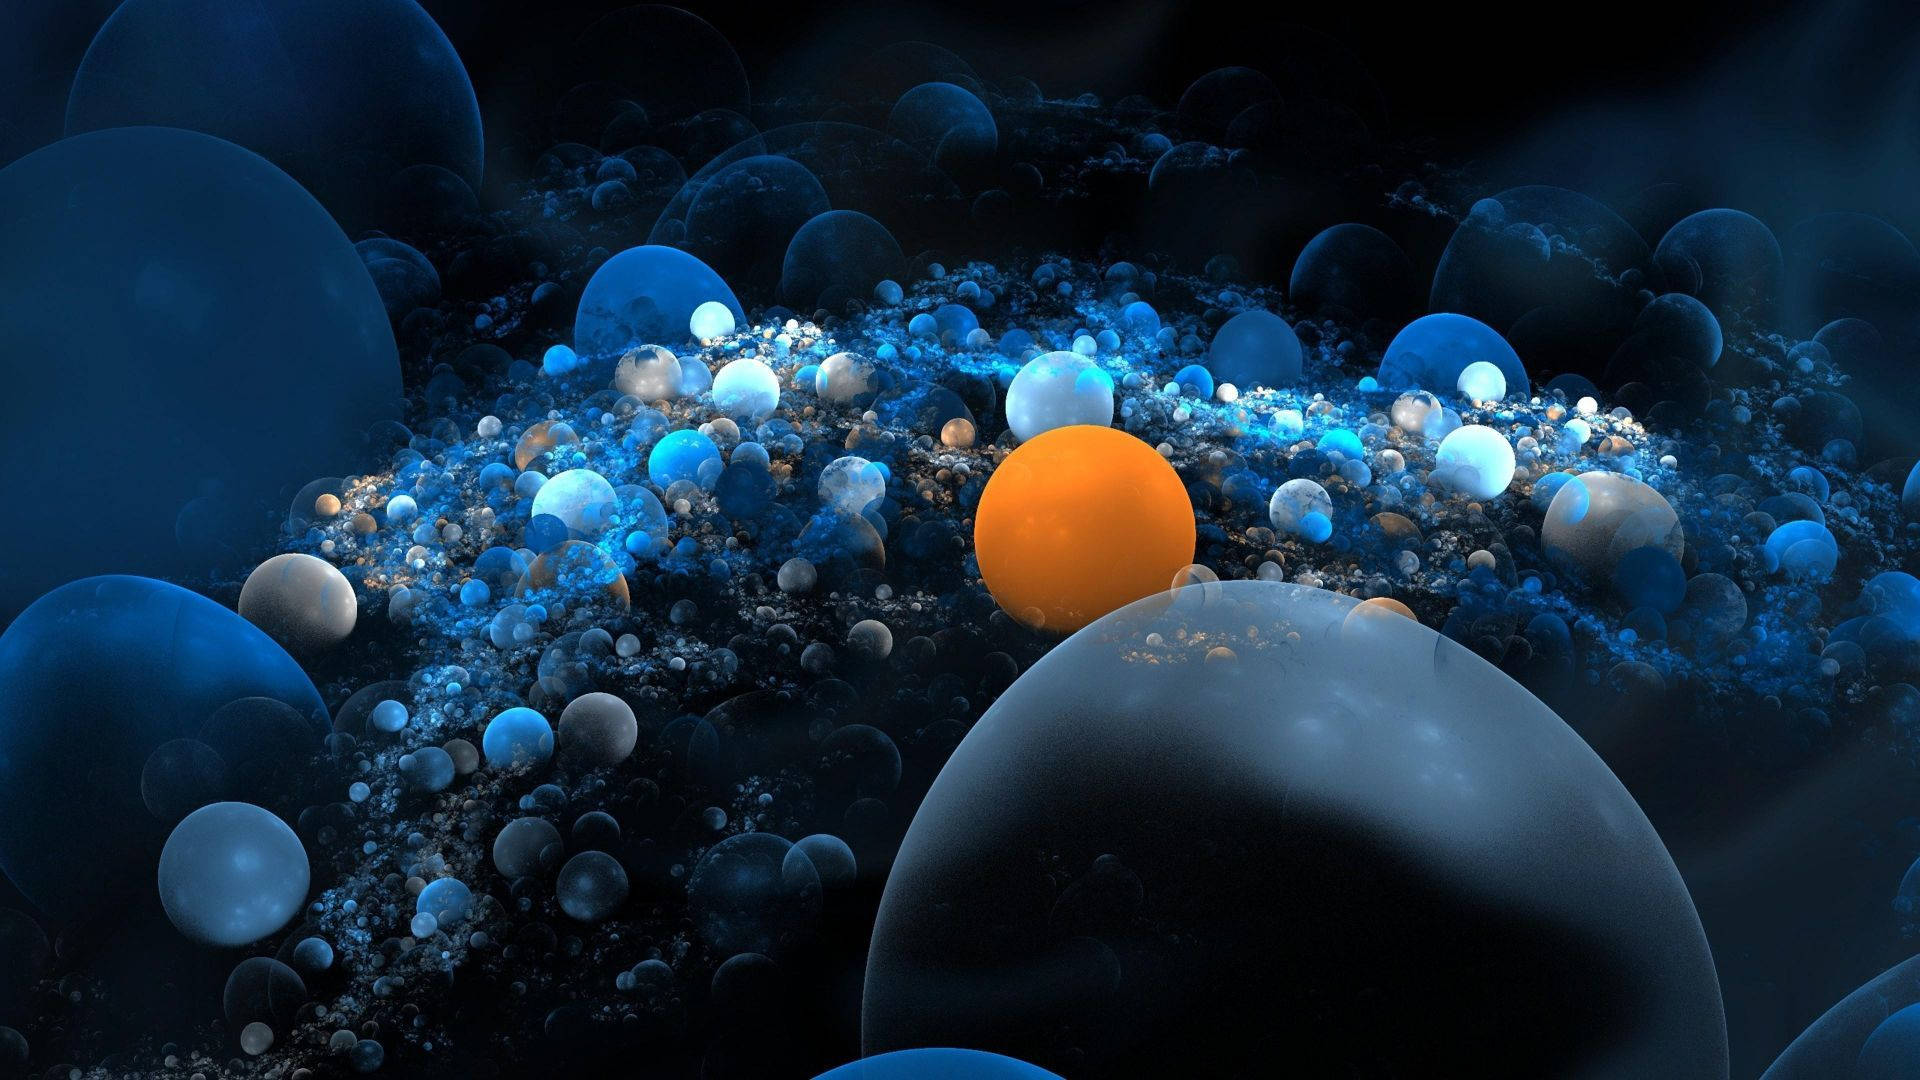 Cool Orange Circle And Blue Spheres